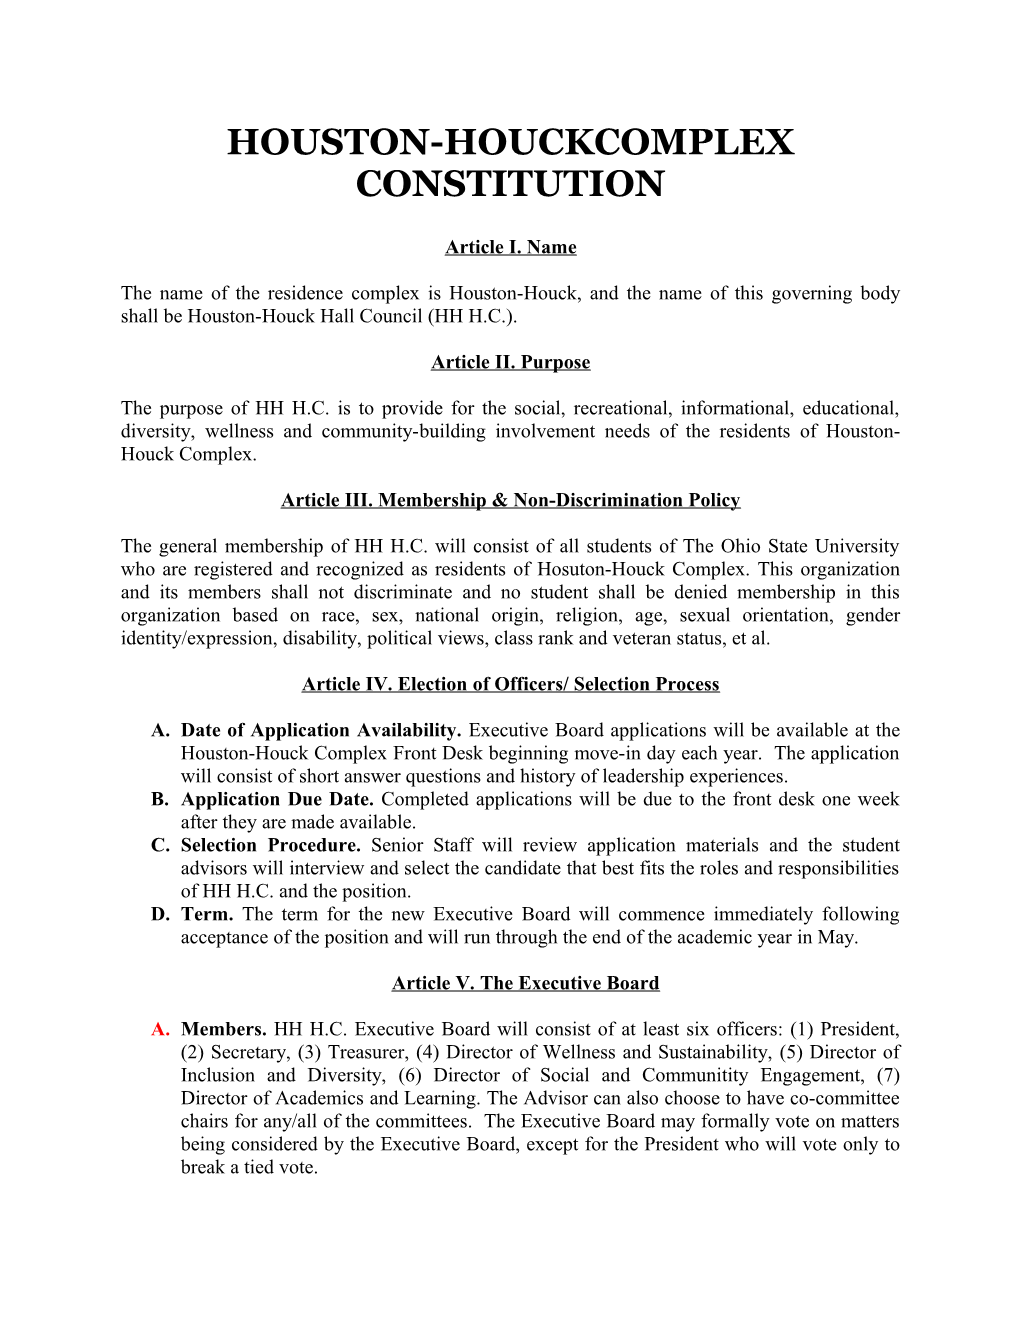 Houston-Houckcomplex Constitution